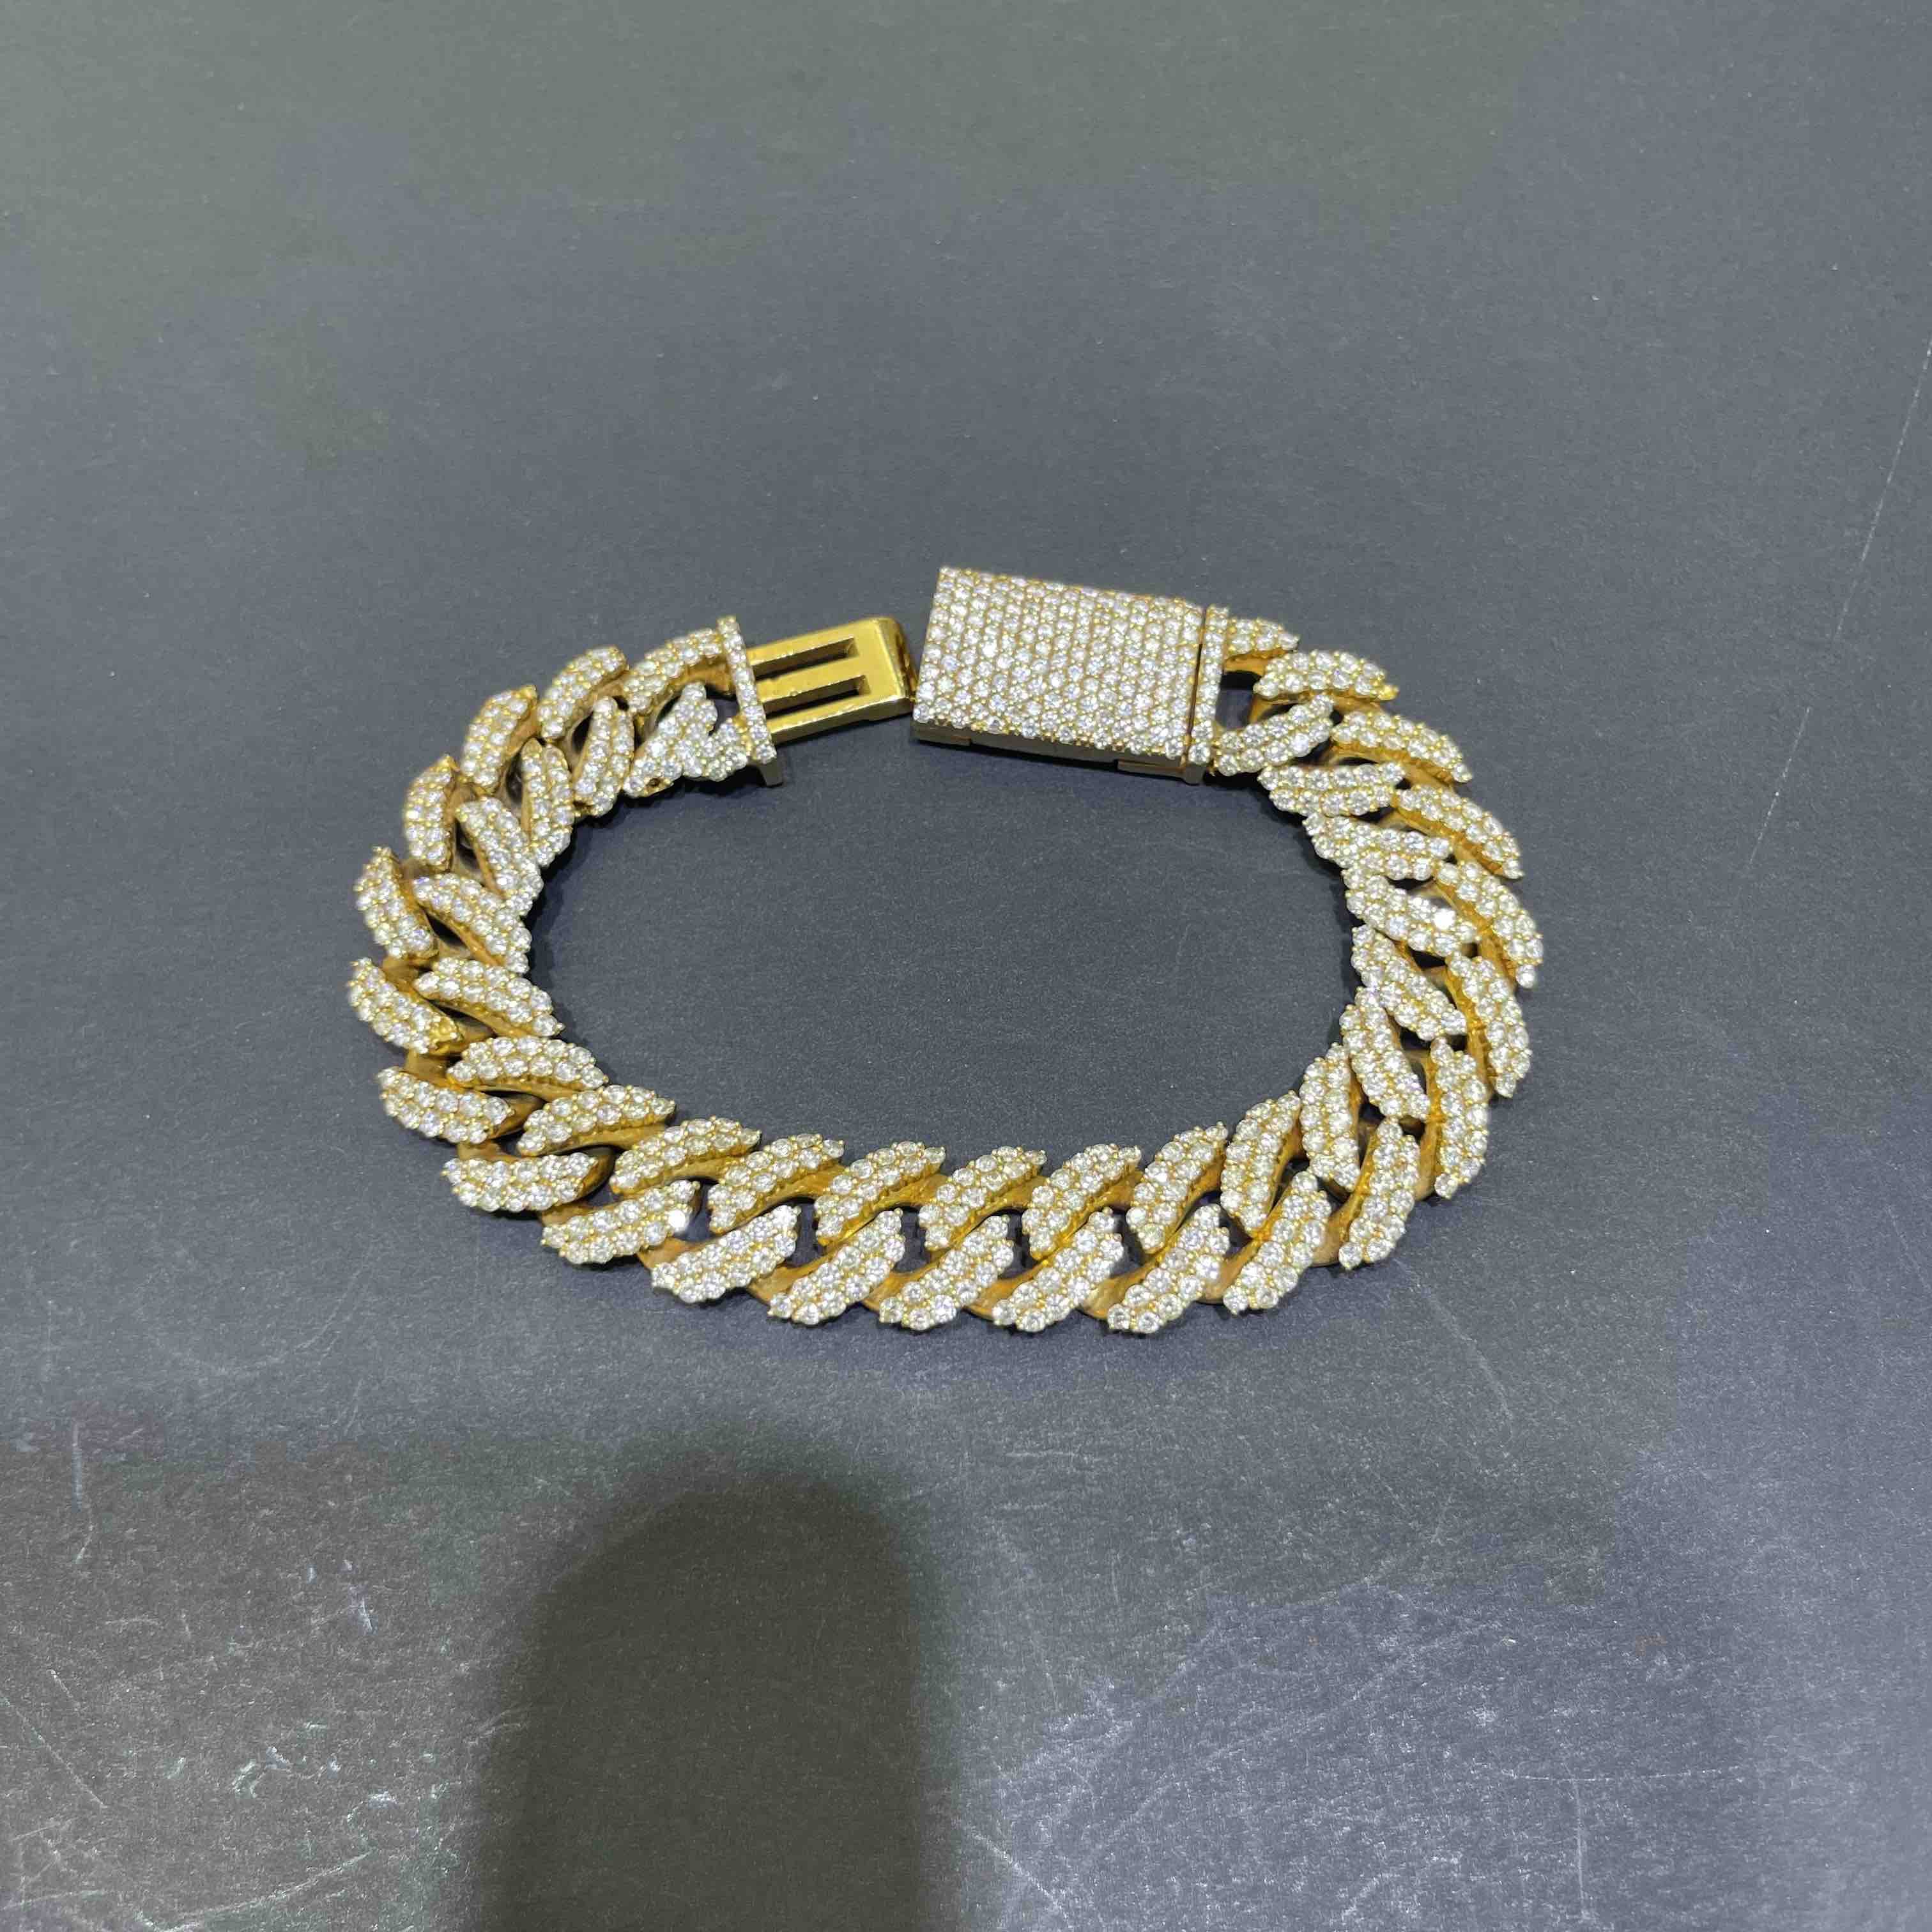  Iced Out Cuban Link Bracelet